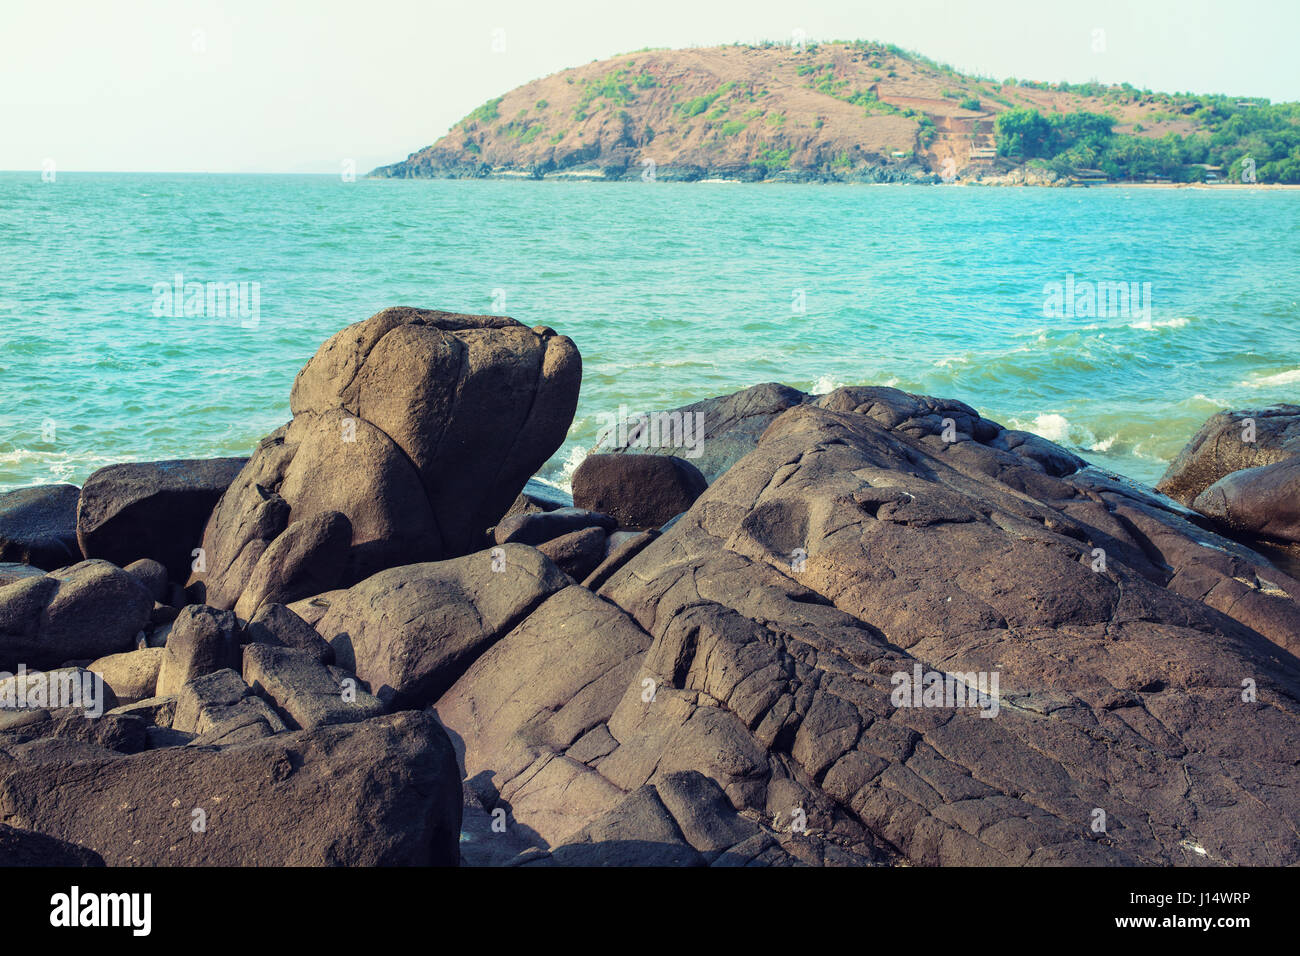 Seascape with a stony shore and a mountain. India, Gokarna, Kudle Beach Stock Photo